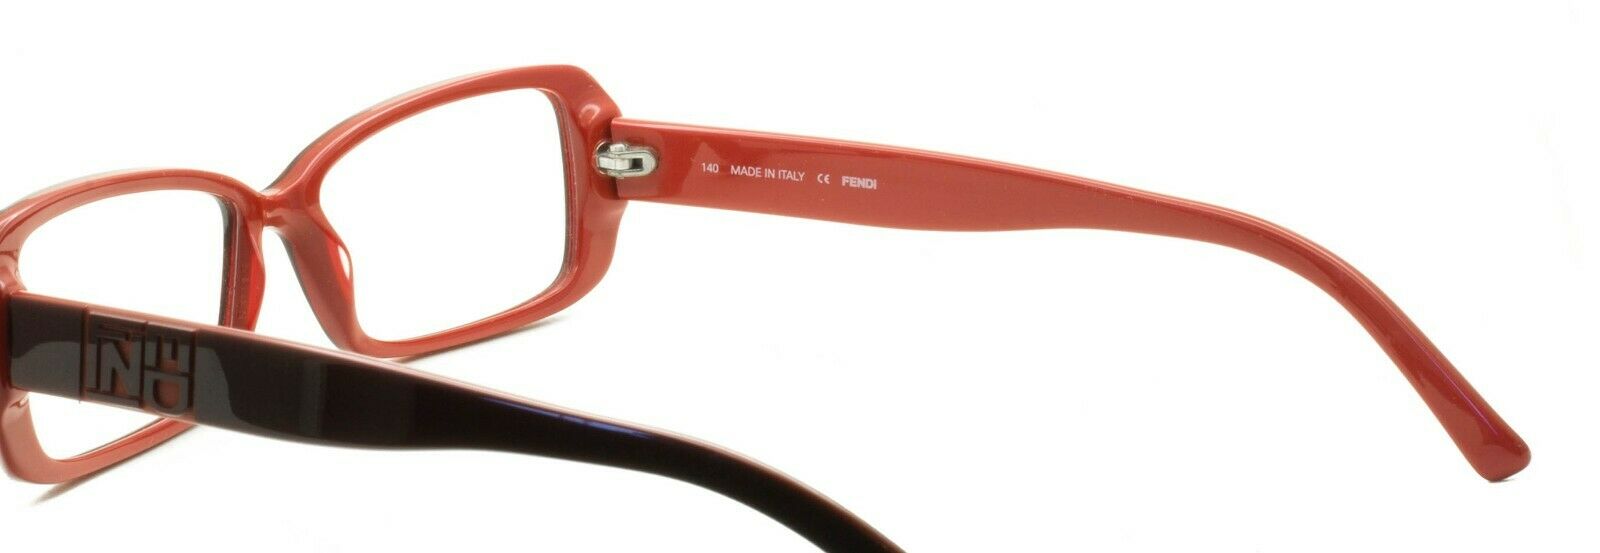 FENDI F768 603 53mm Eyewear RX Optical FRAMES Glasses Eyeglasses Italy -New BNIB